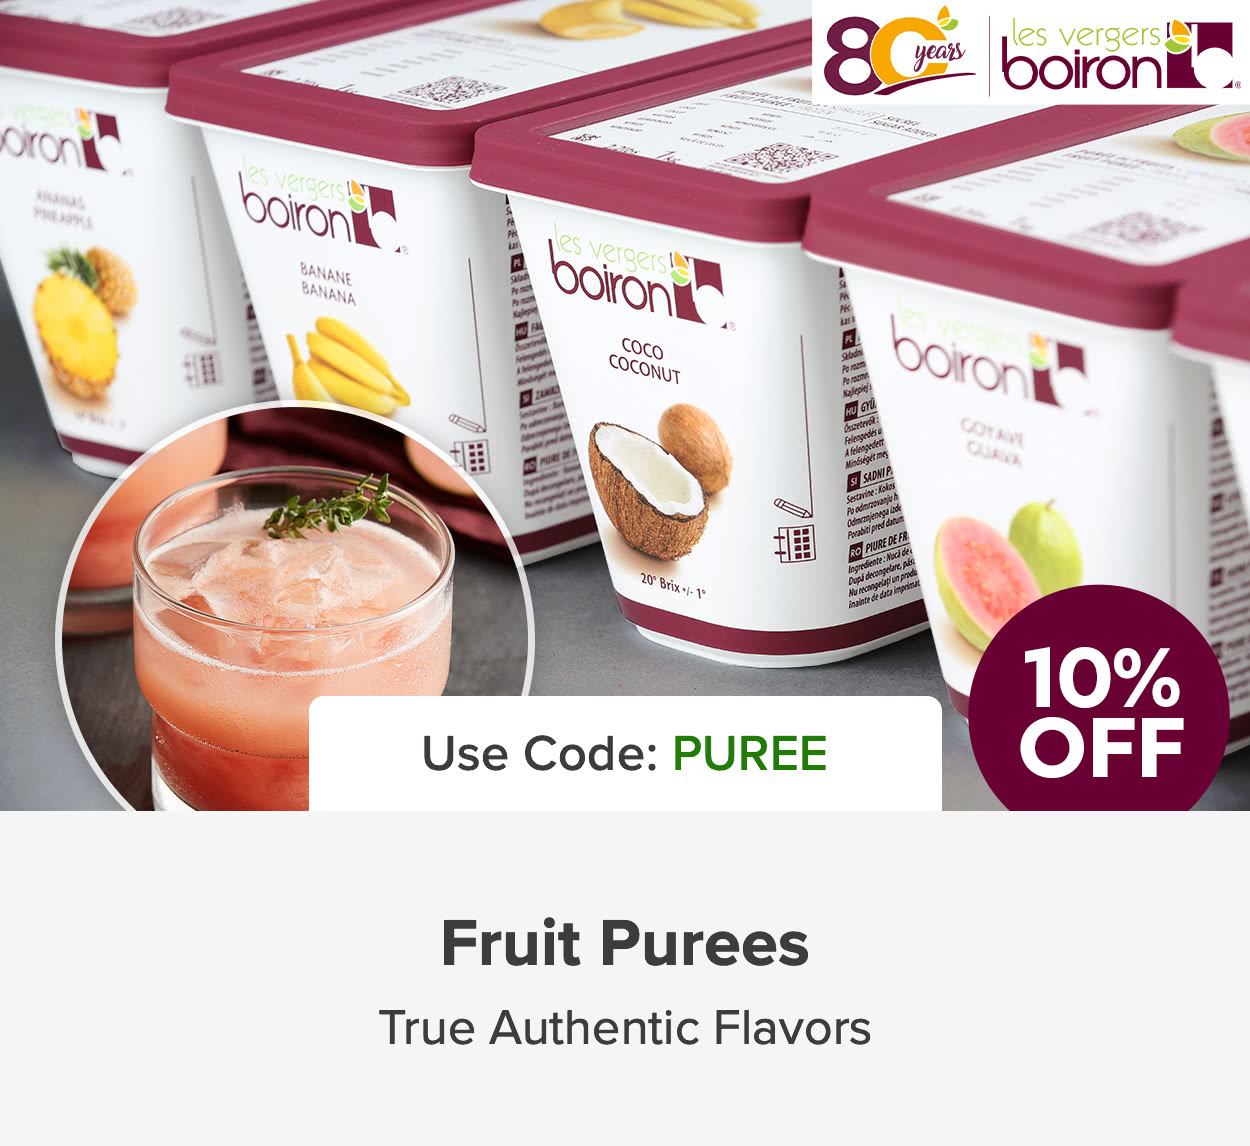 Boiron Fruit Purees - True Authentic Flavors. Now 10% Off.